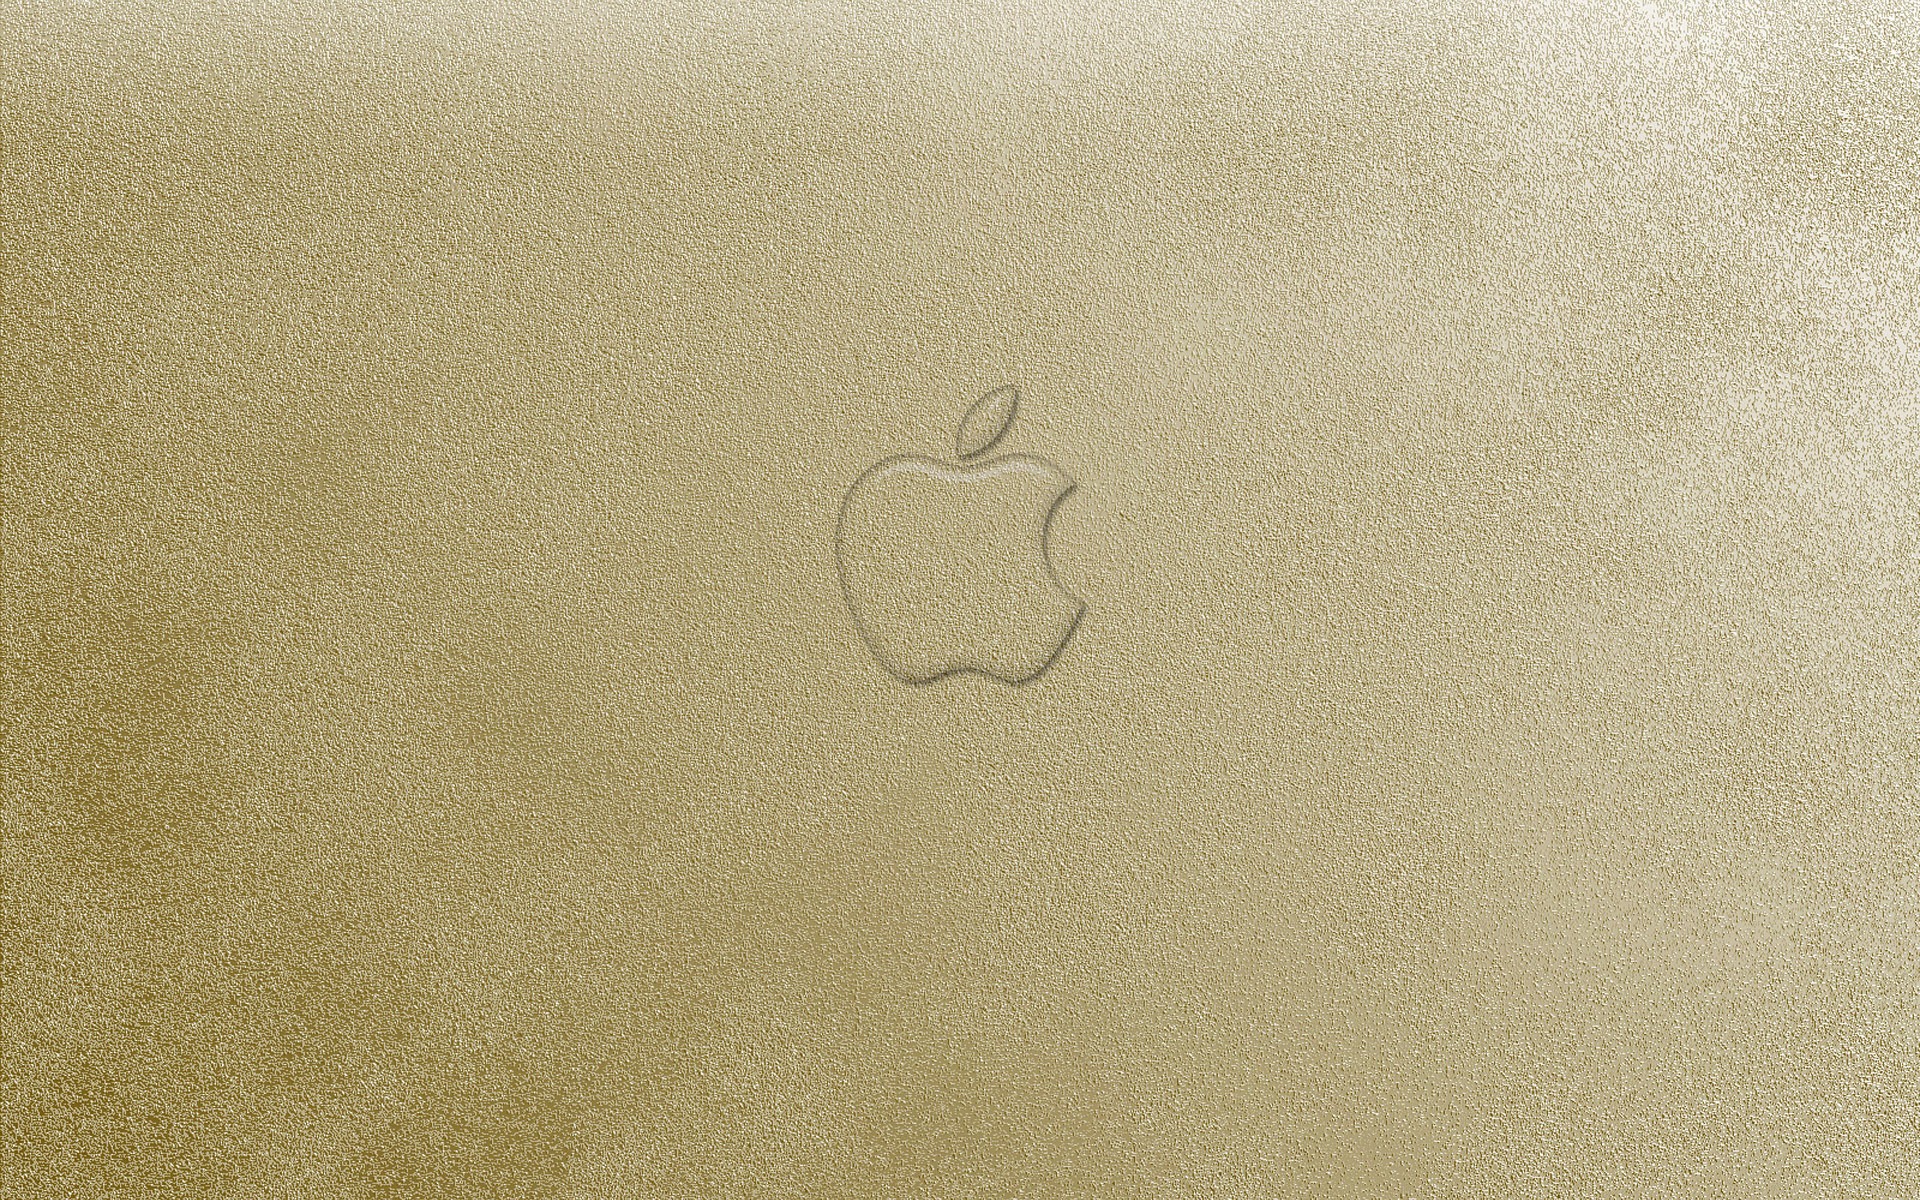 Apple theme wallpaper album (27) #15 - 1920x1200